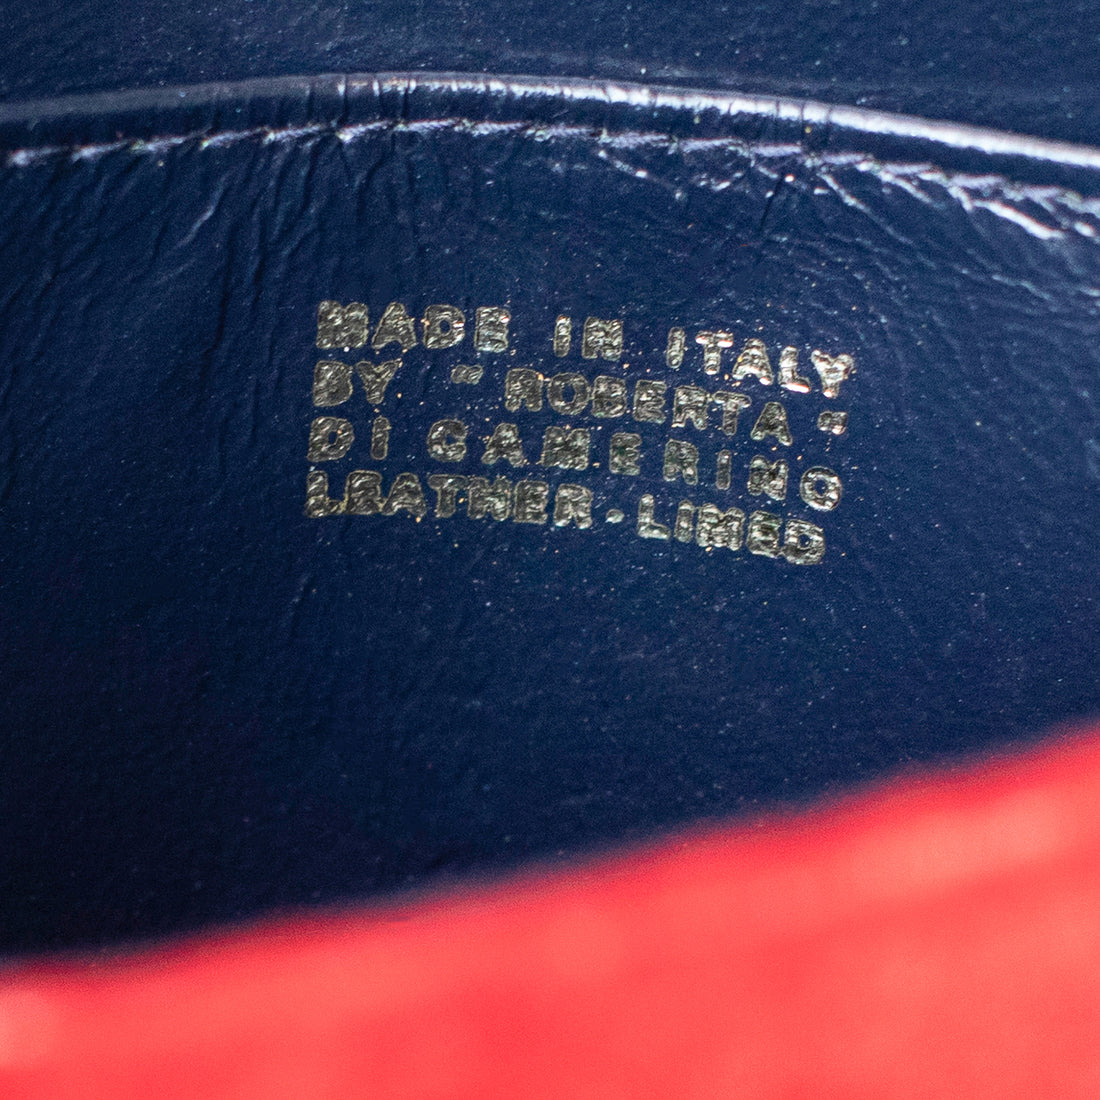 Roberta di Camerino Red clutch bag with gold chain